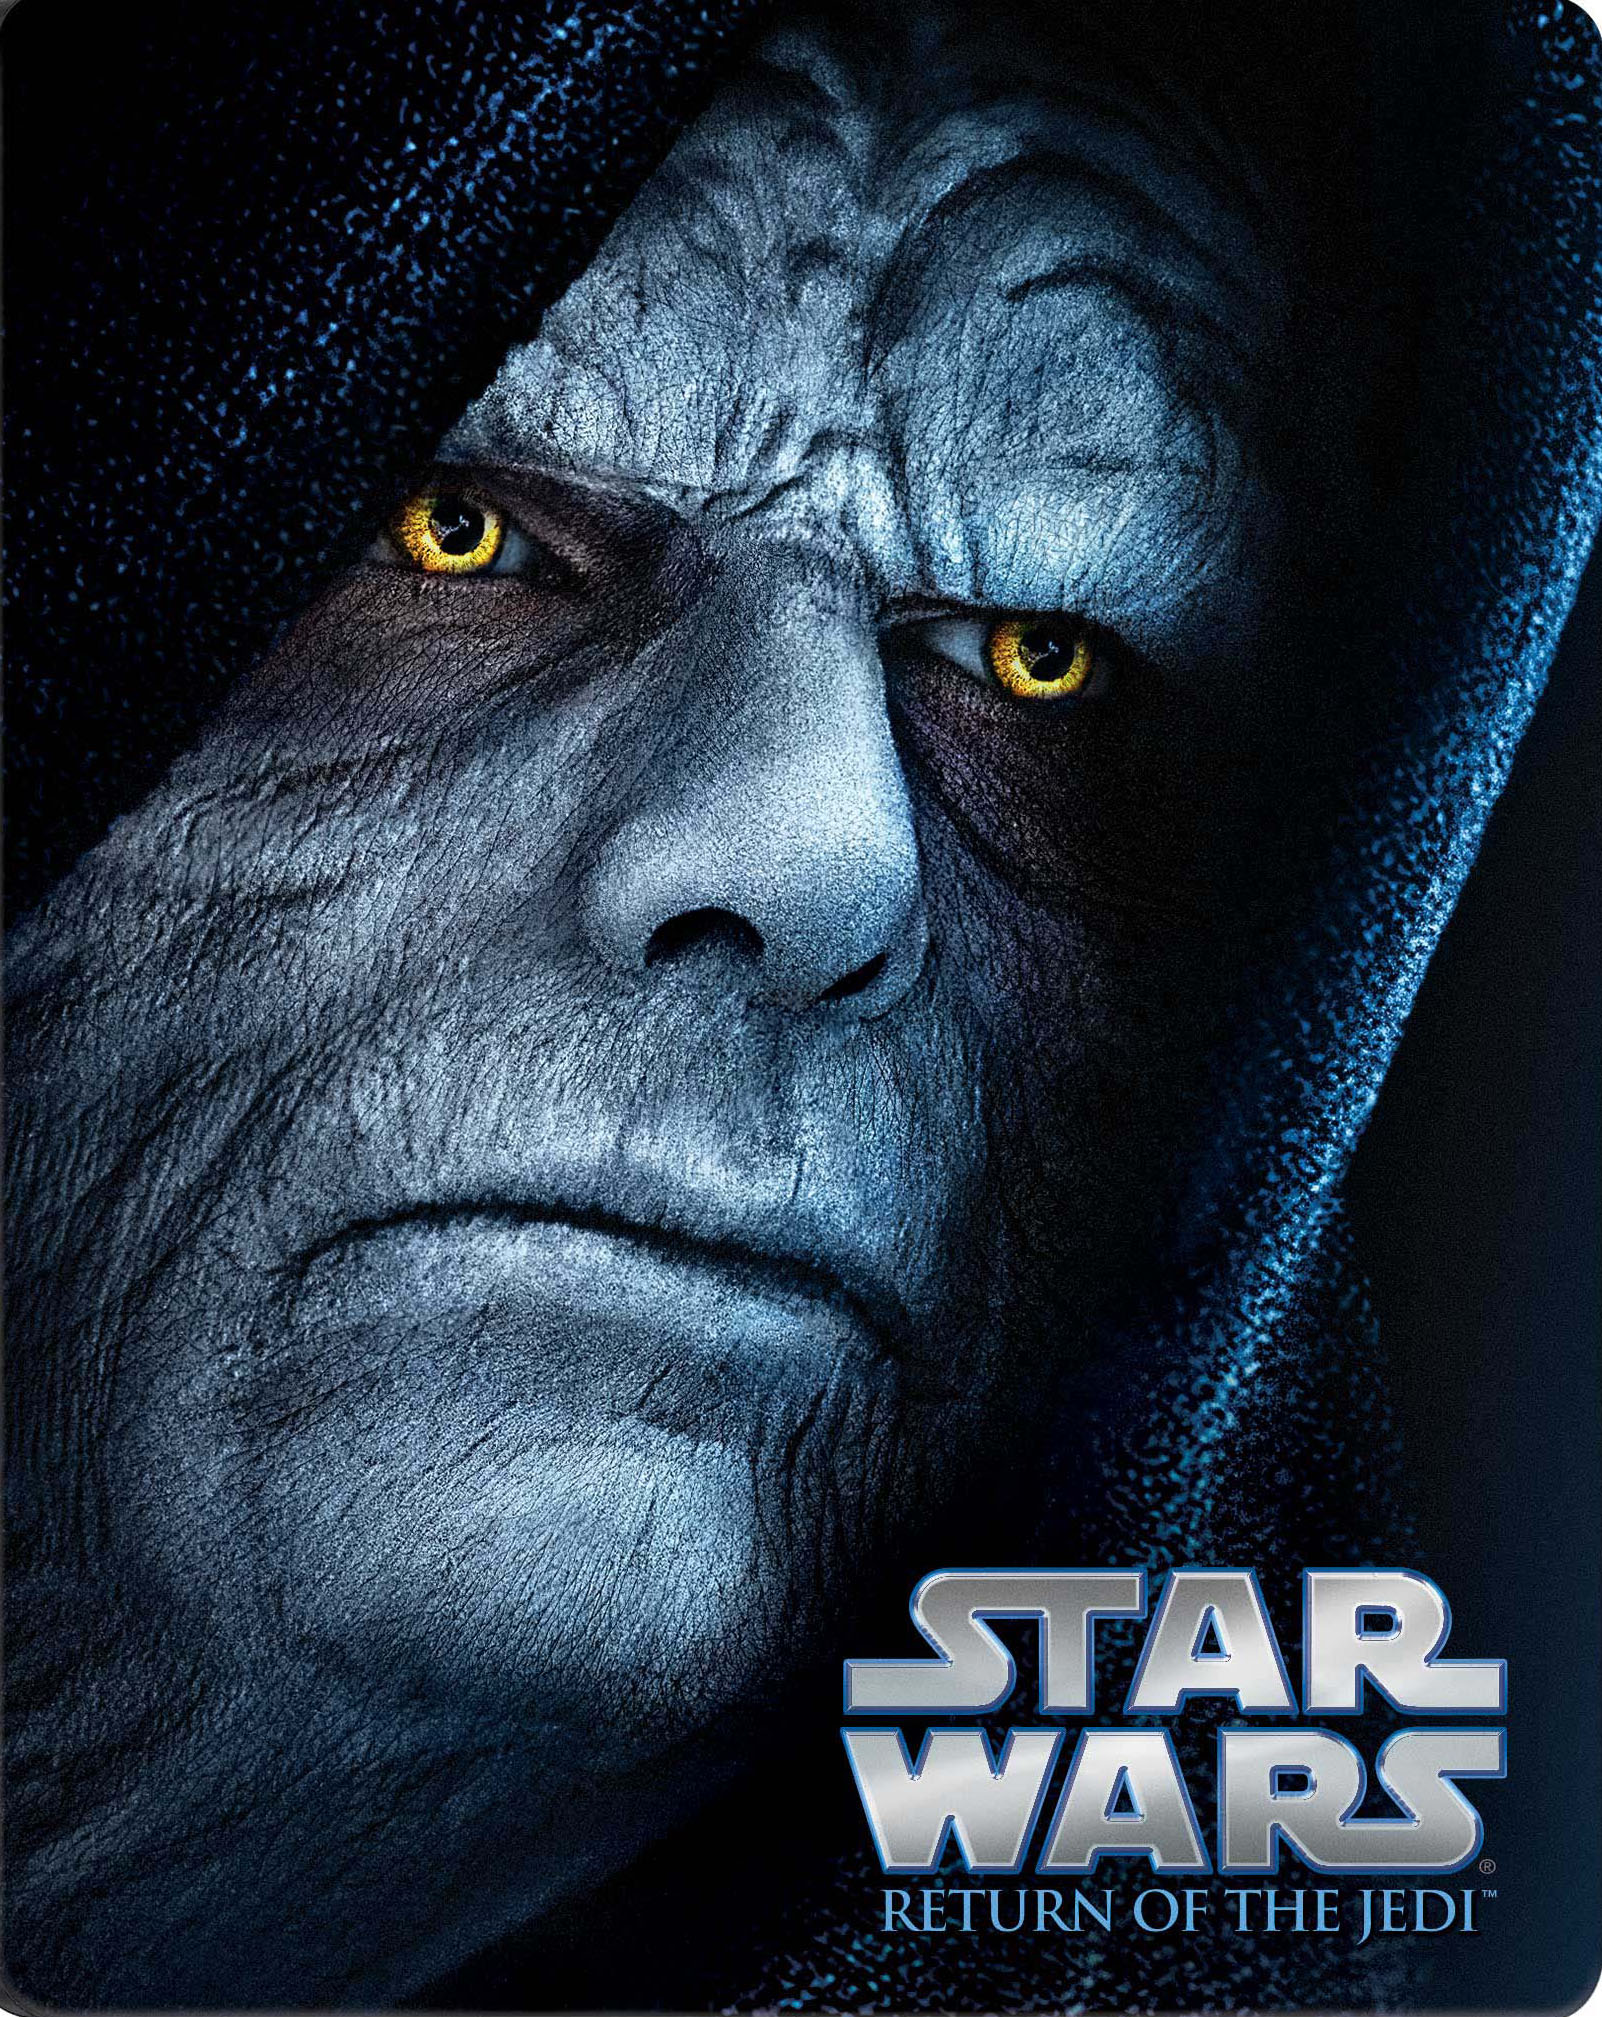  Star Wars Episode VI: Return of the Jedi [Blu-ray] [2020]  [Region Free] : Movies & TV